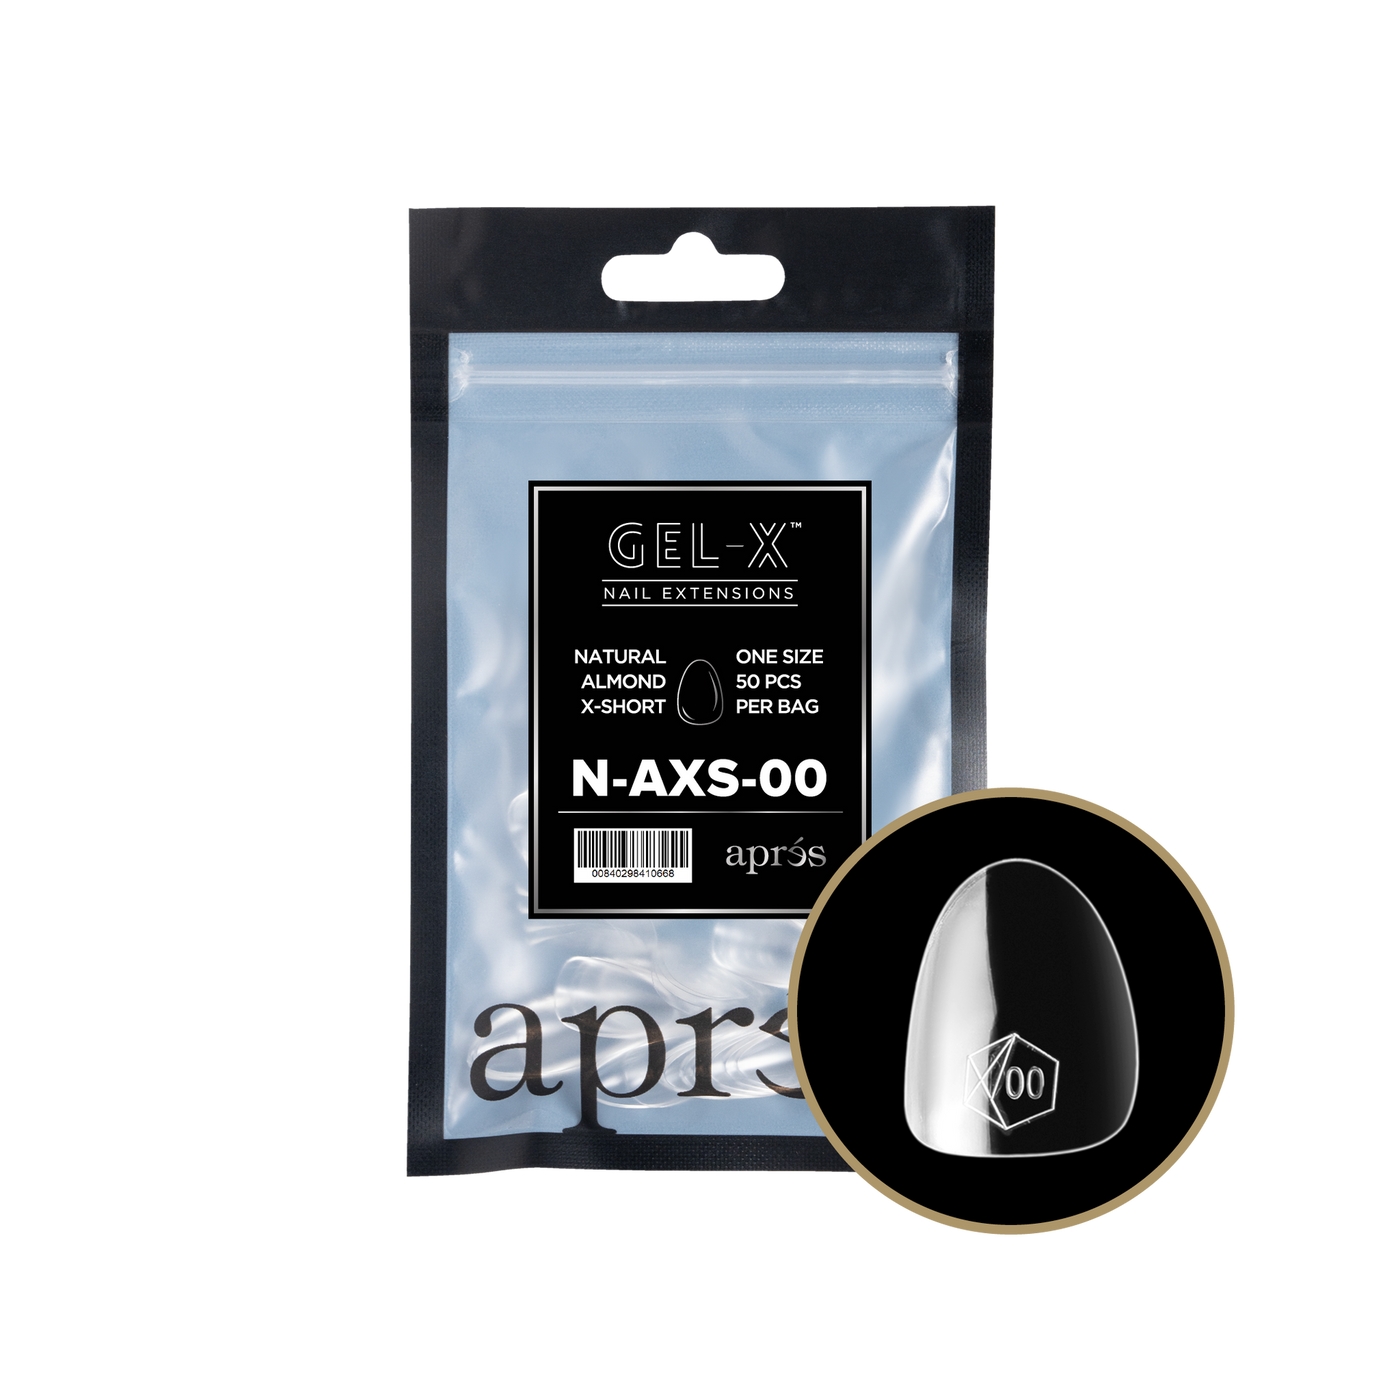 APRES - GEL-X ® NATURAL ALMOND EXTRA SHORT REFILL BAG 2.0